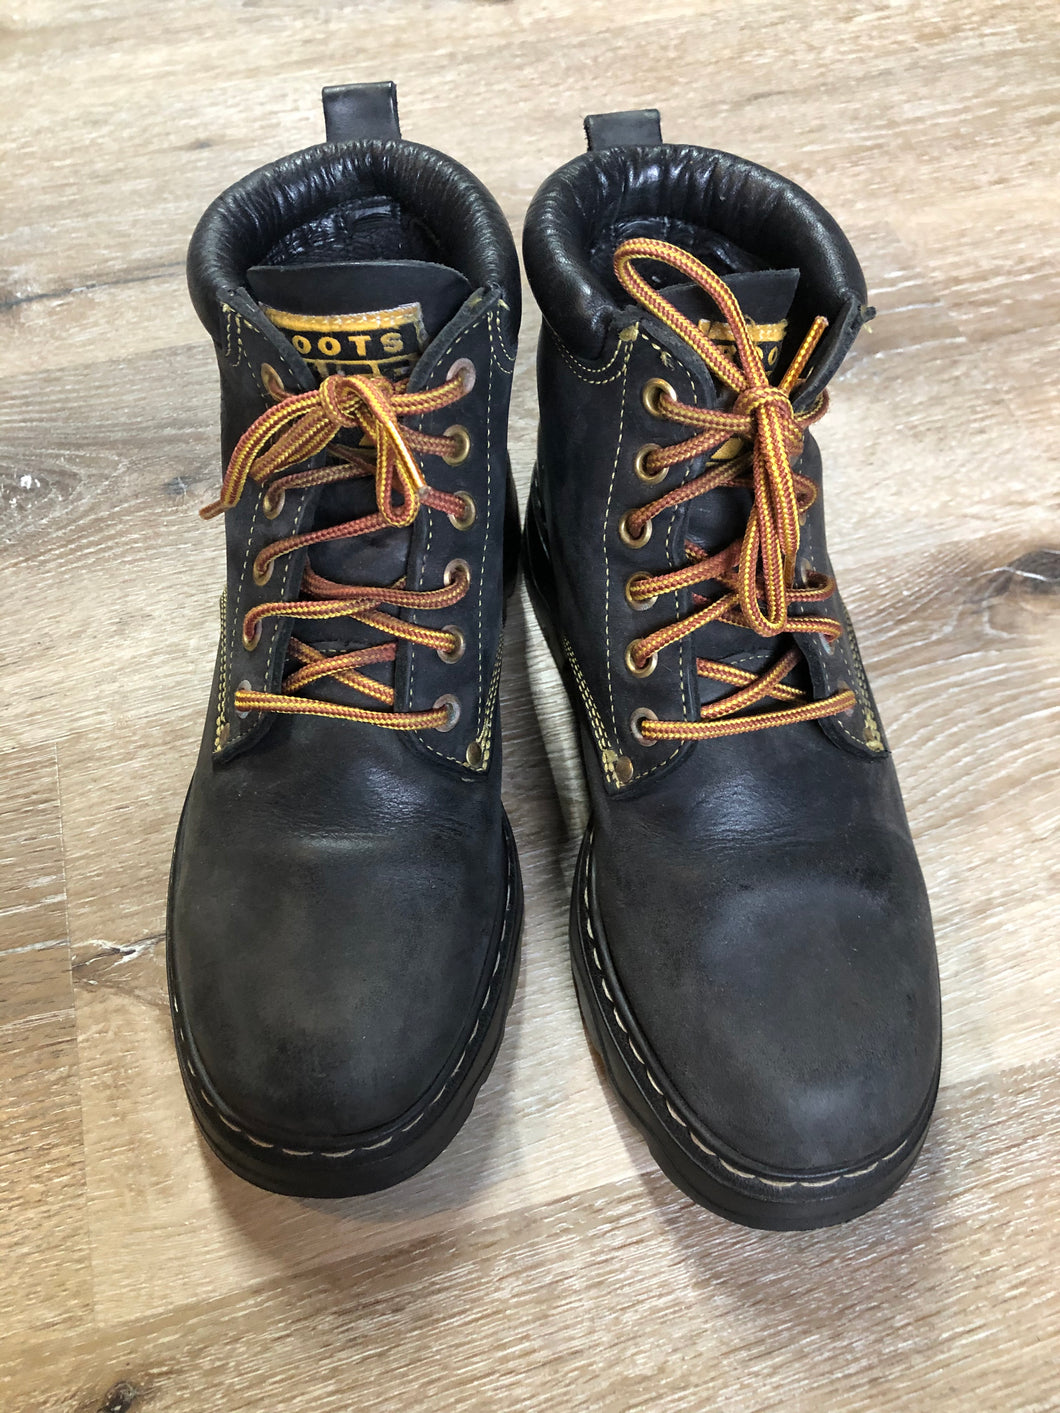 Roots Tuff Black Nubuck Hiking Boots SOLD – KingsPIER vintage